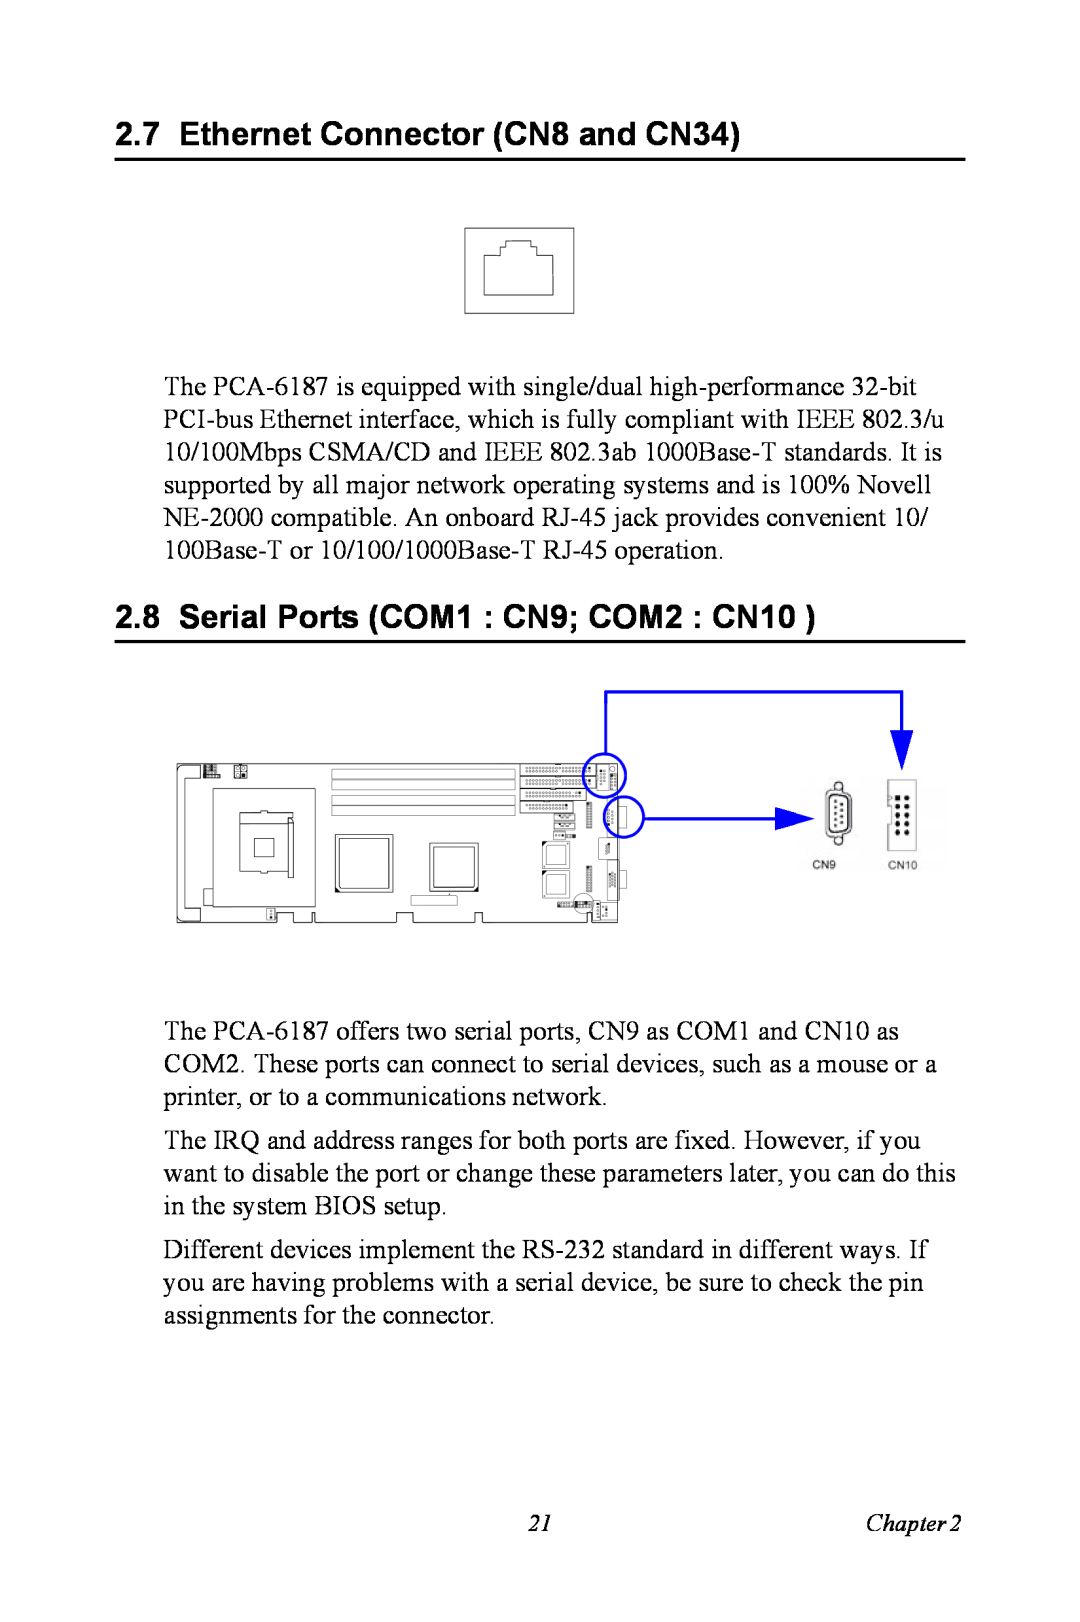 Advantech PCA-6187 user manual Ethernet Connector CN8 and CN34, Serial Ports COM1 CN9 COM2 CN10 